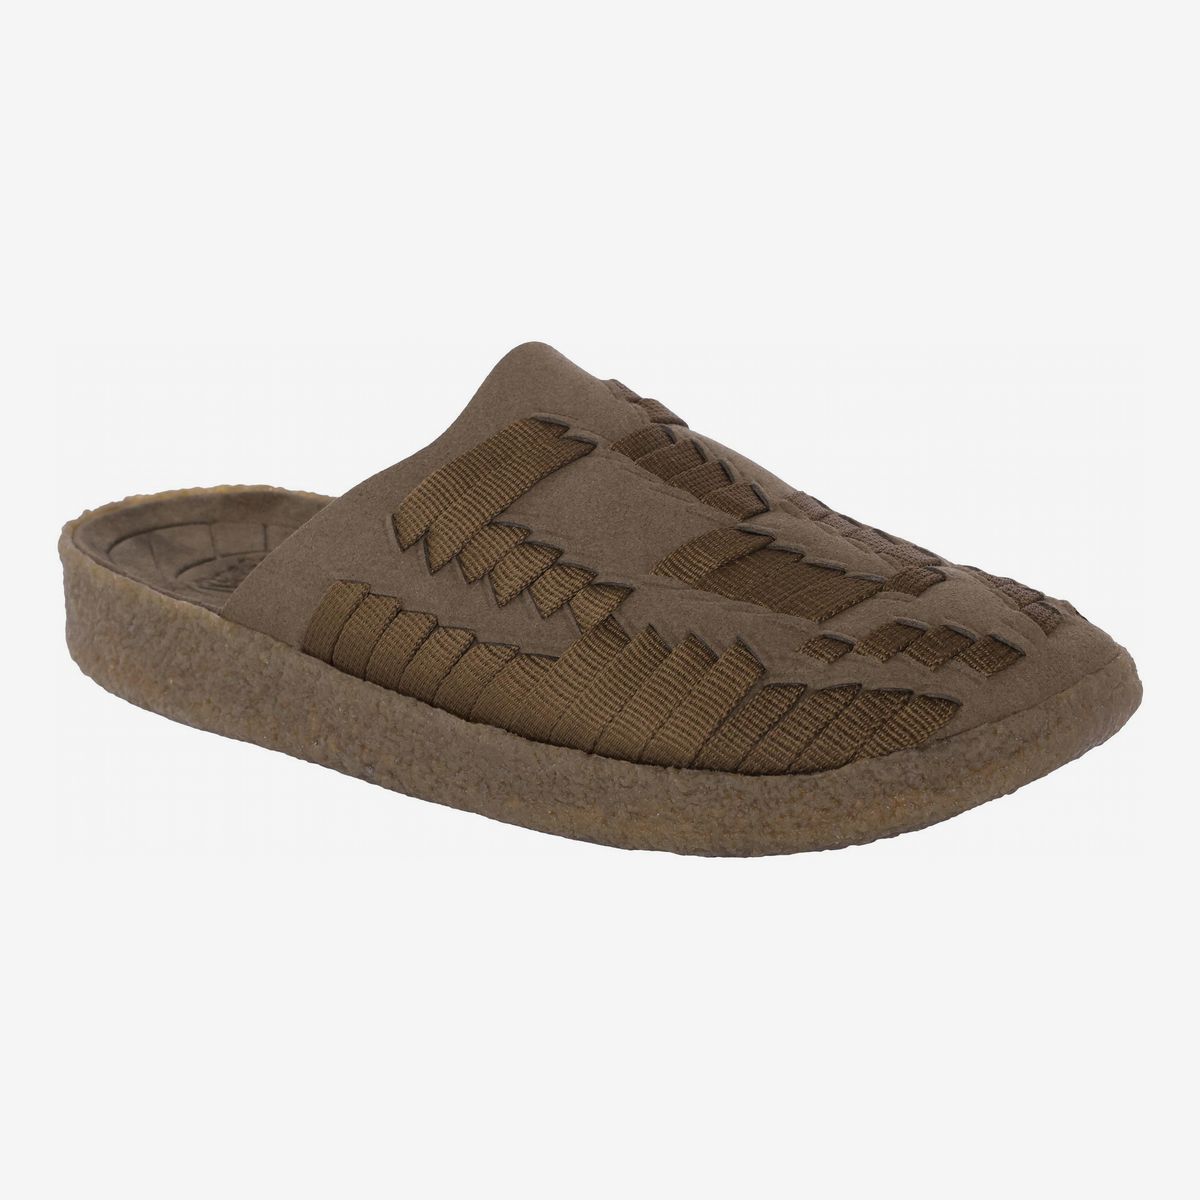 Men's Sheepskin Wool Brown Leather Slippers Shoes Size 7 8 9 10 11 12 13 Luxury 